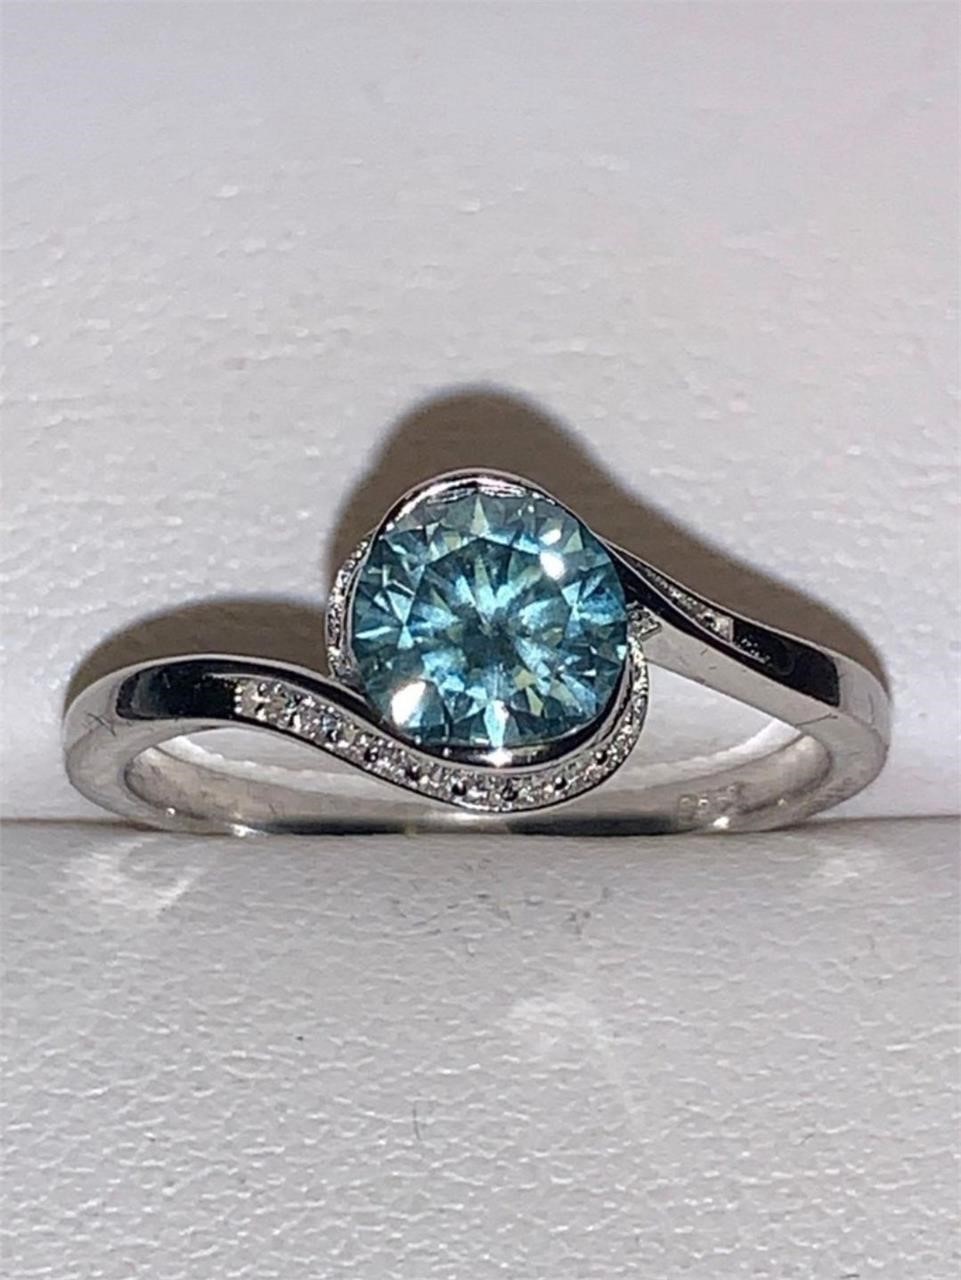 Appraised gemstone ring